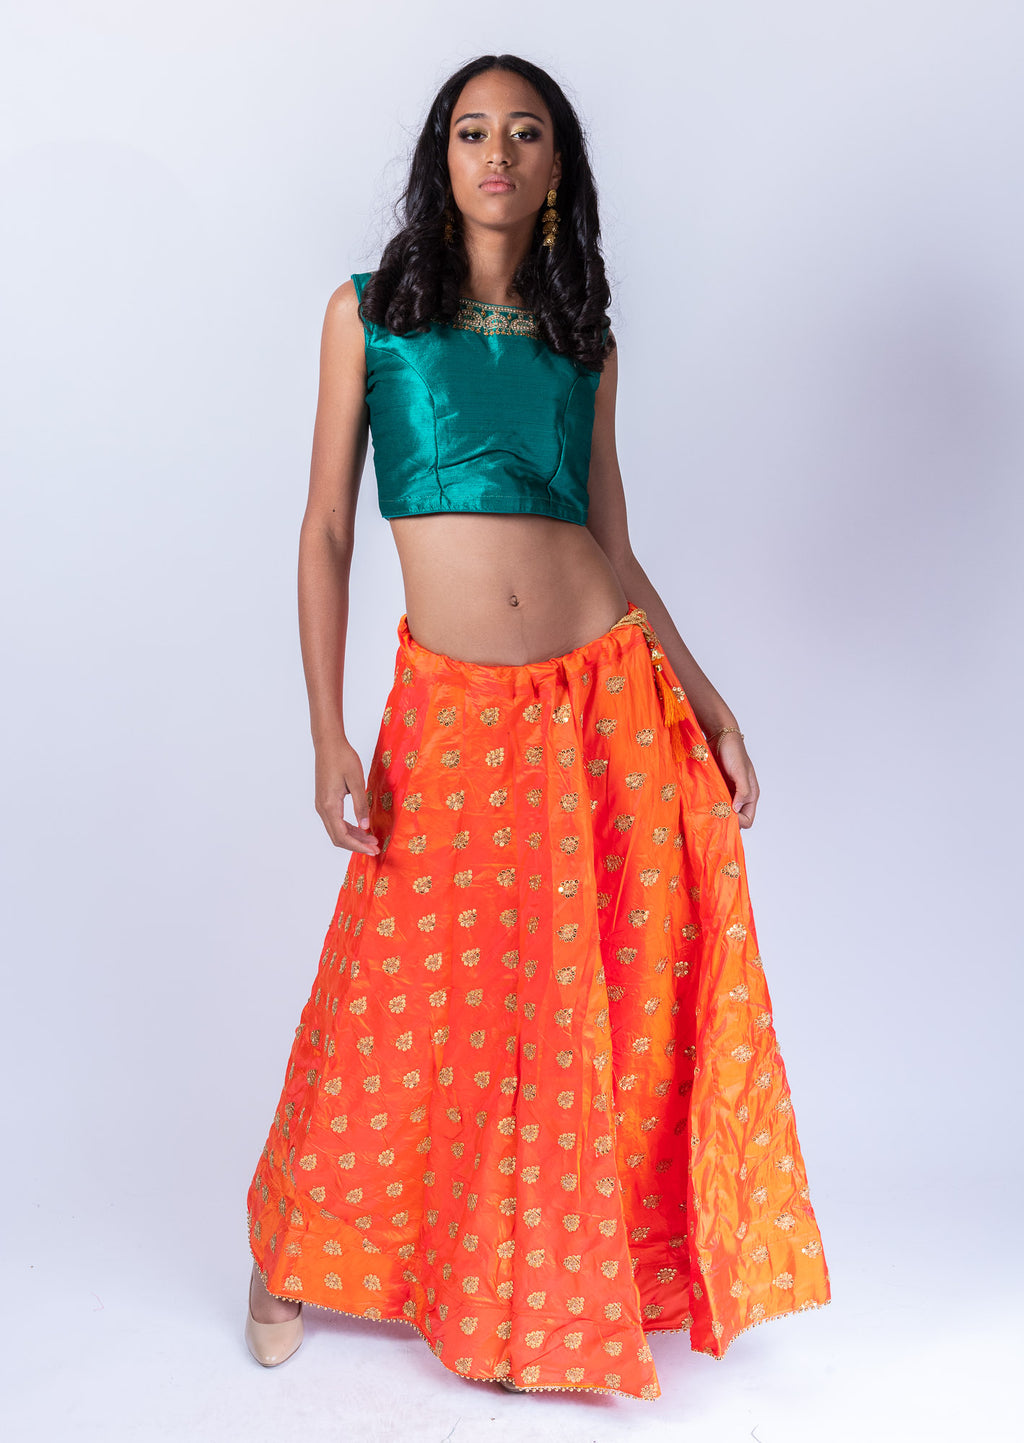 Fancy Silk Tiger Orange Embroidered Lehenga Skirt